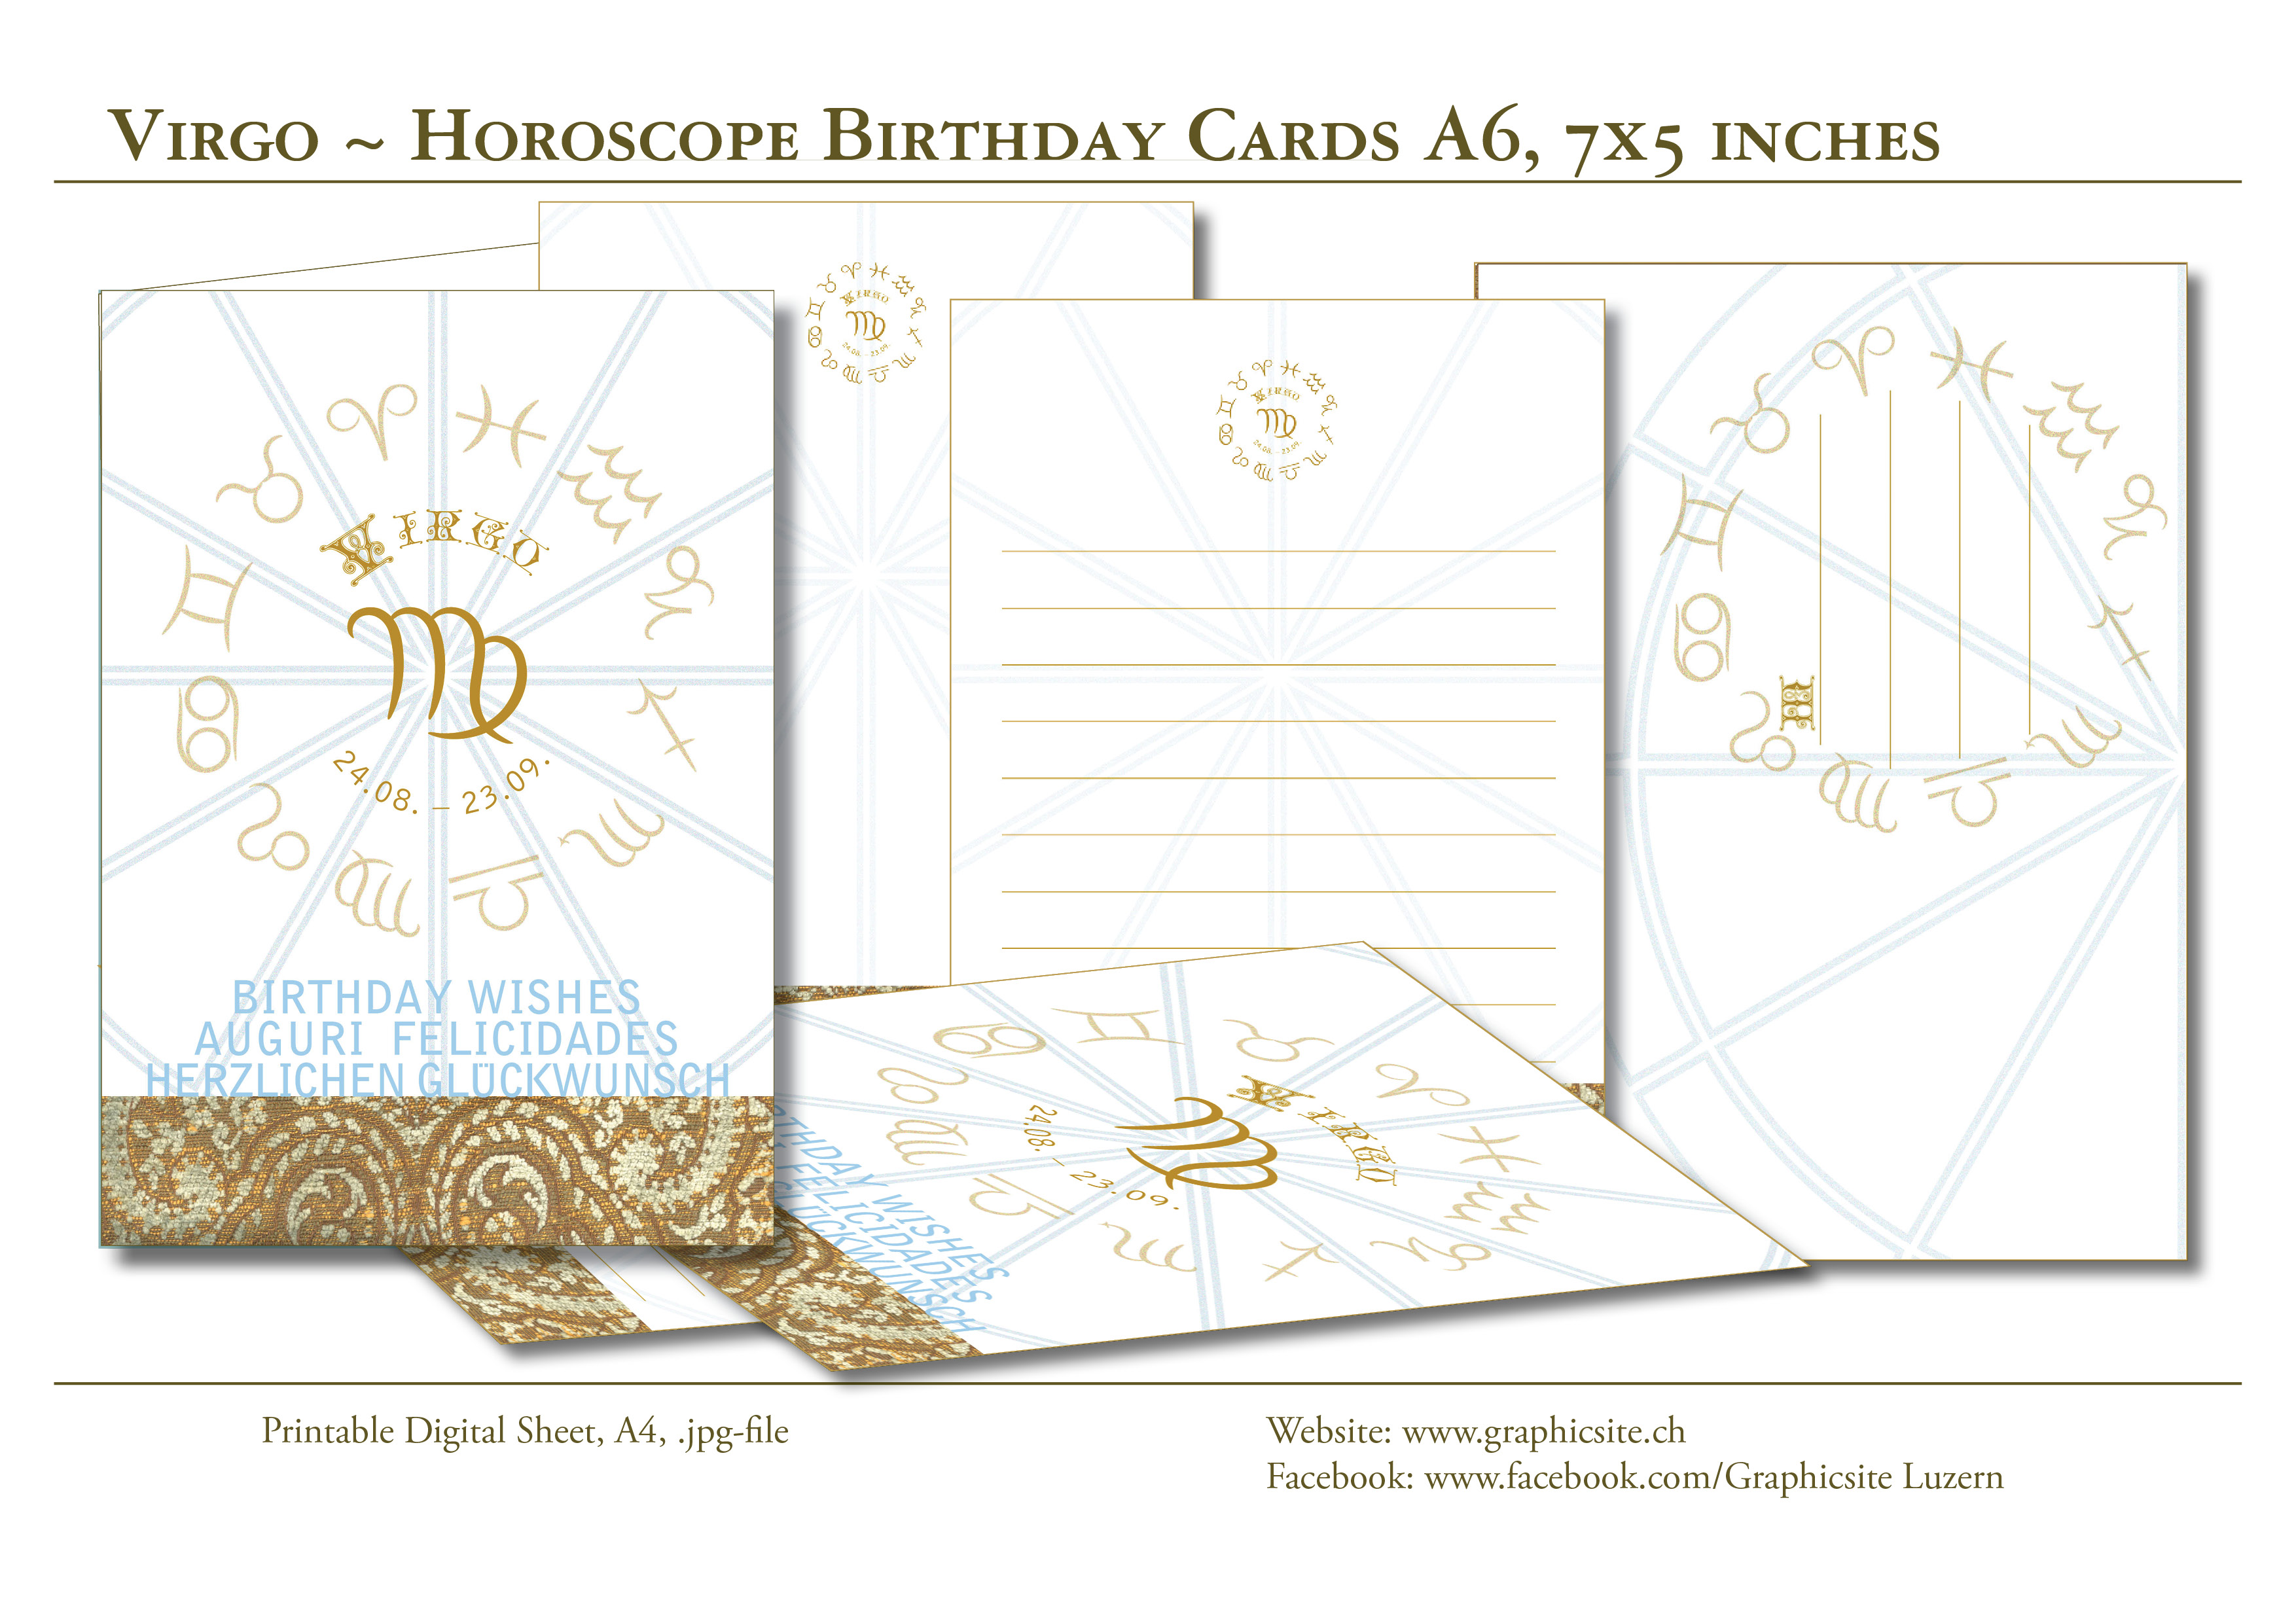 Printable Digital Sheets - Birthday Card Collection - Horoscope - Zodiac - Virgo A6 - GraphicDesign, Luzern